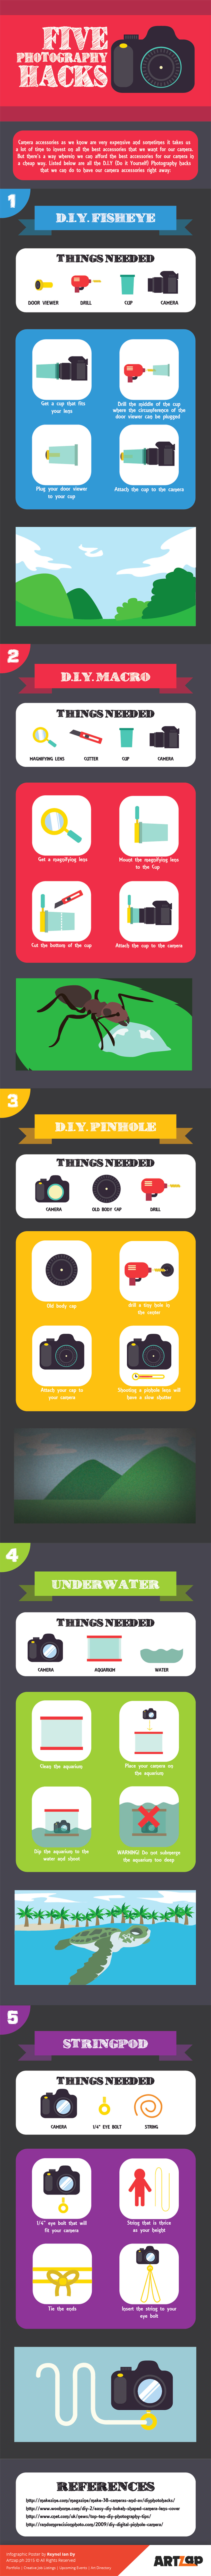 5 DIY Photography Hacks Infographic